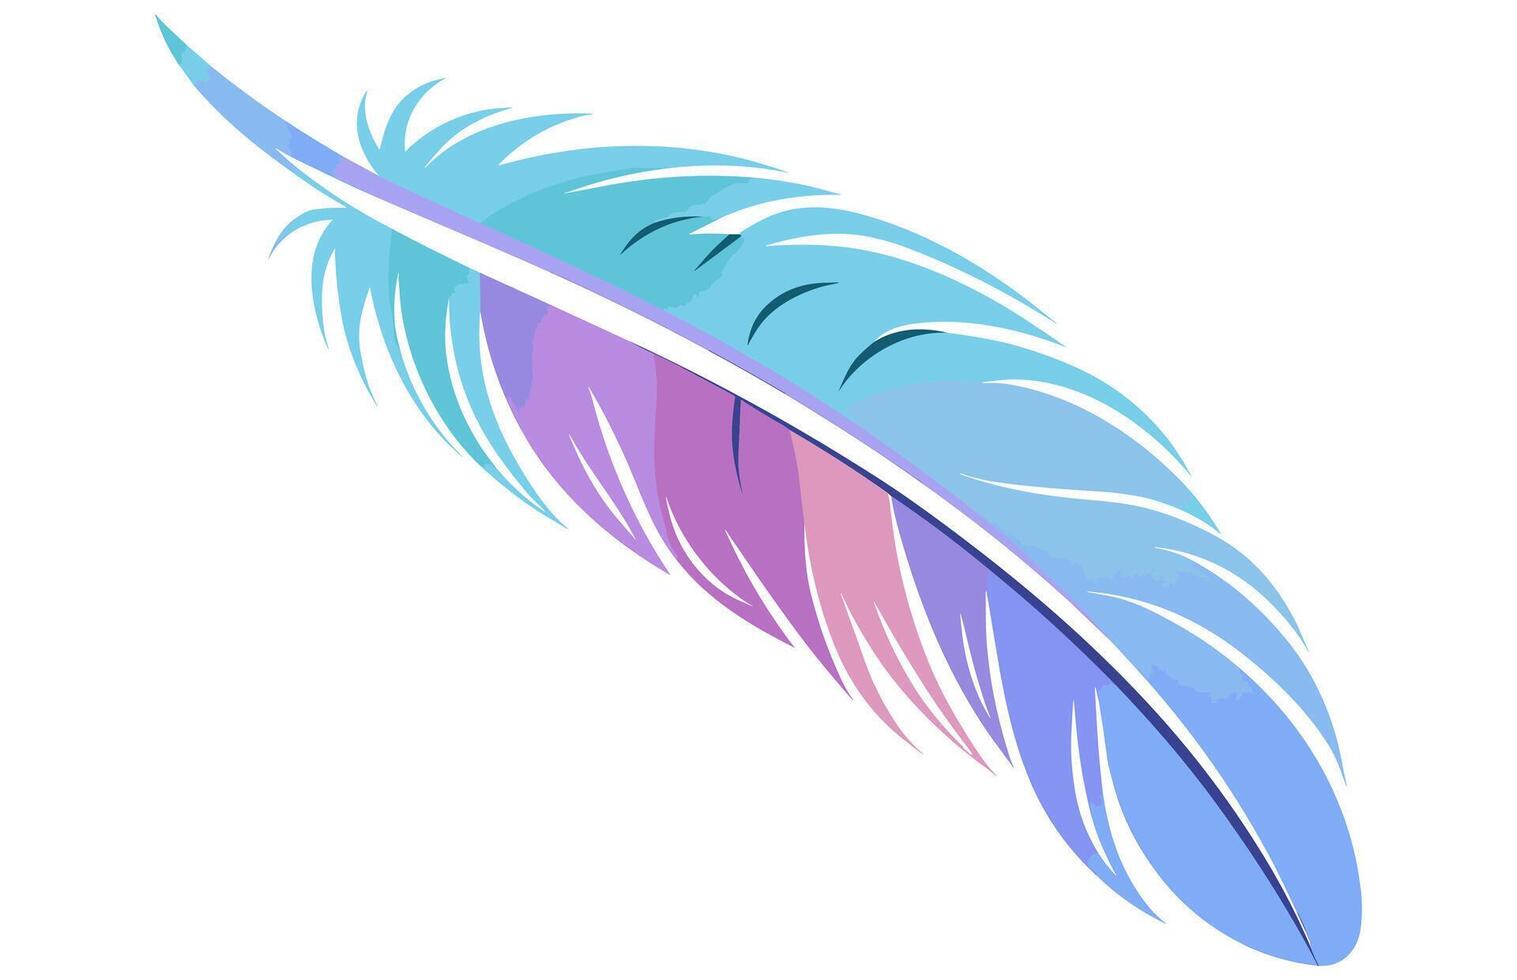 vistoso pluma vector ilustración, vector de un pájaro pluma